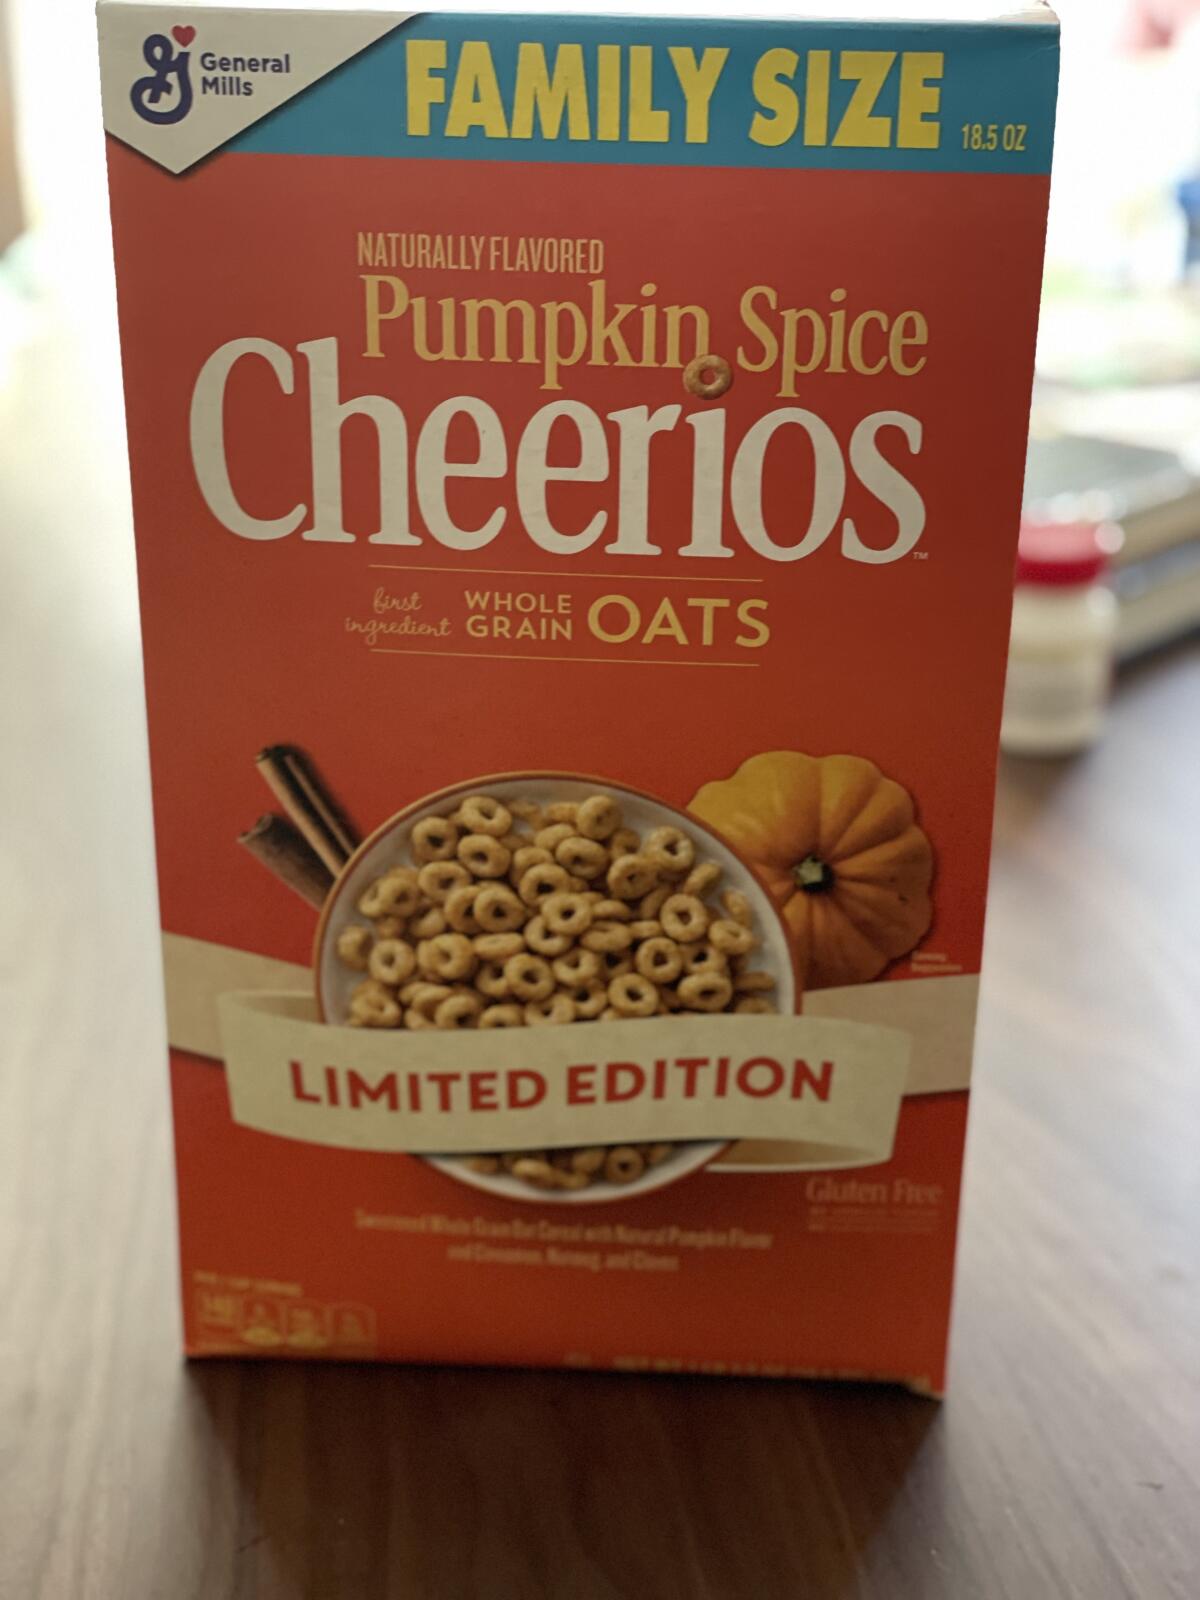 A box of Pumpkin Spice Cheerios cereal